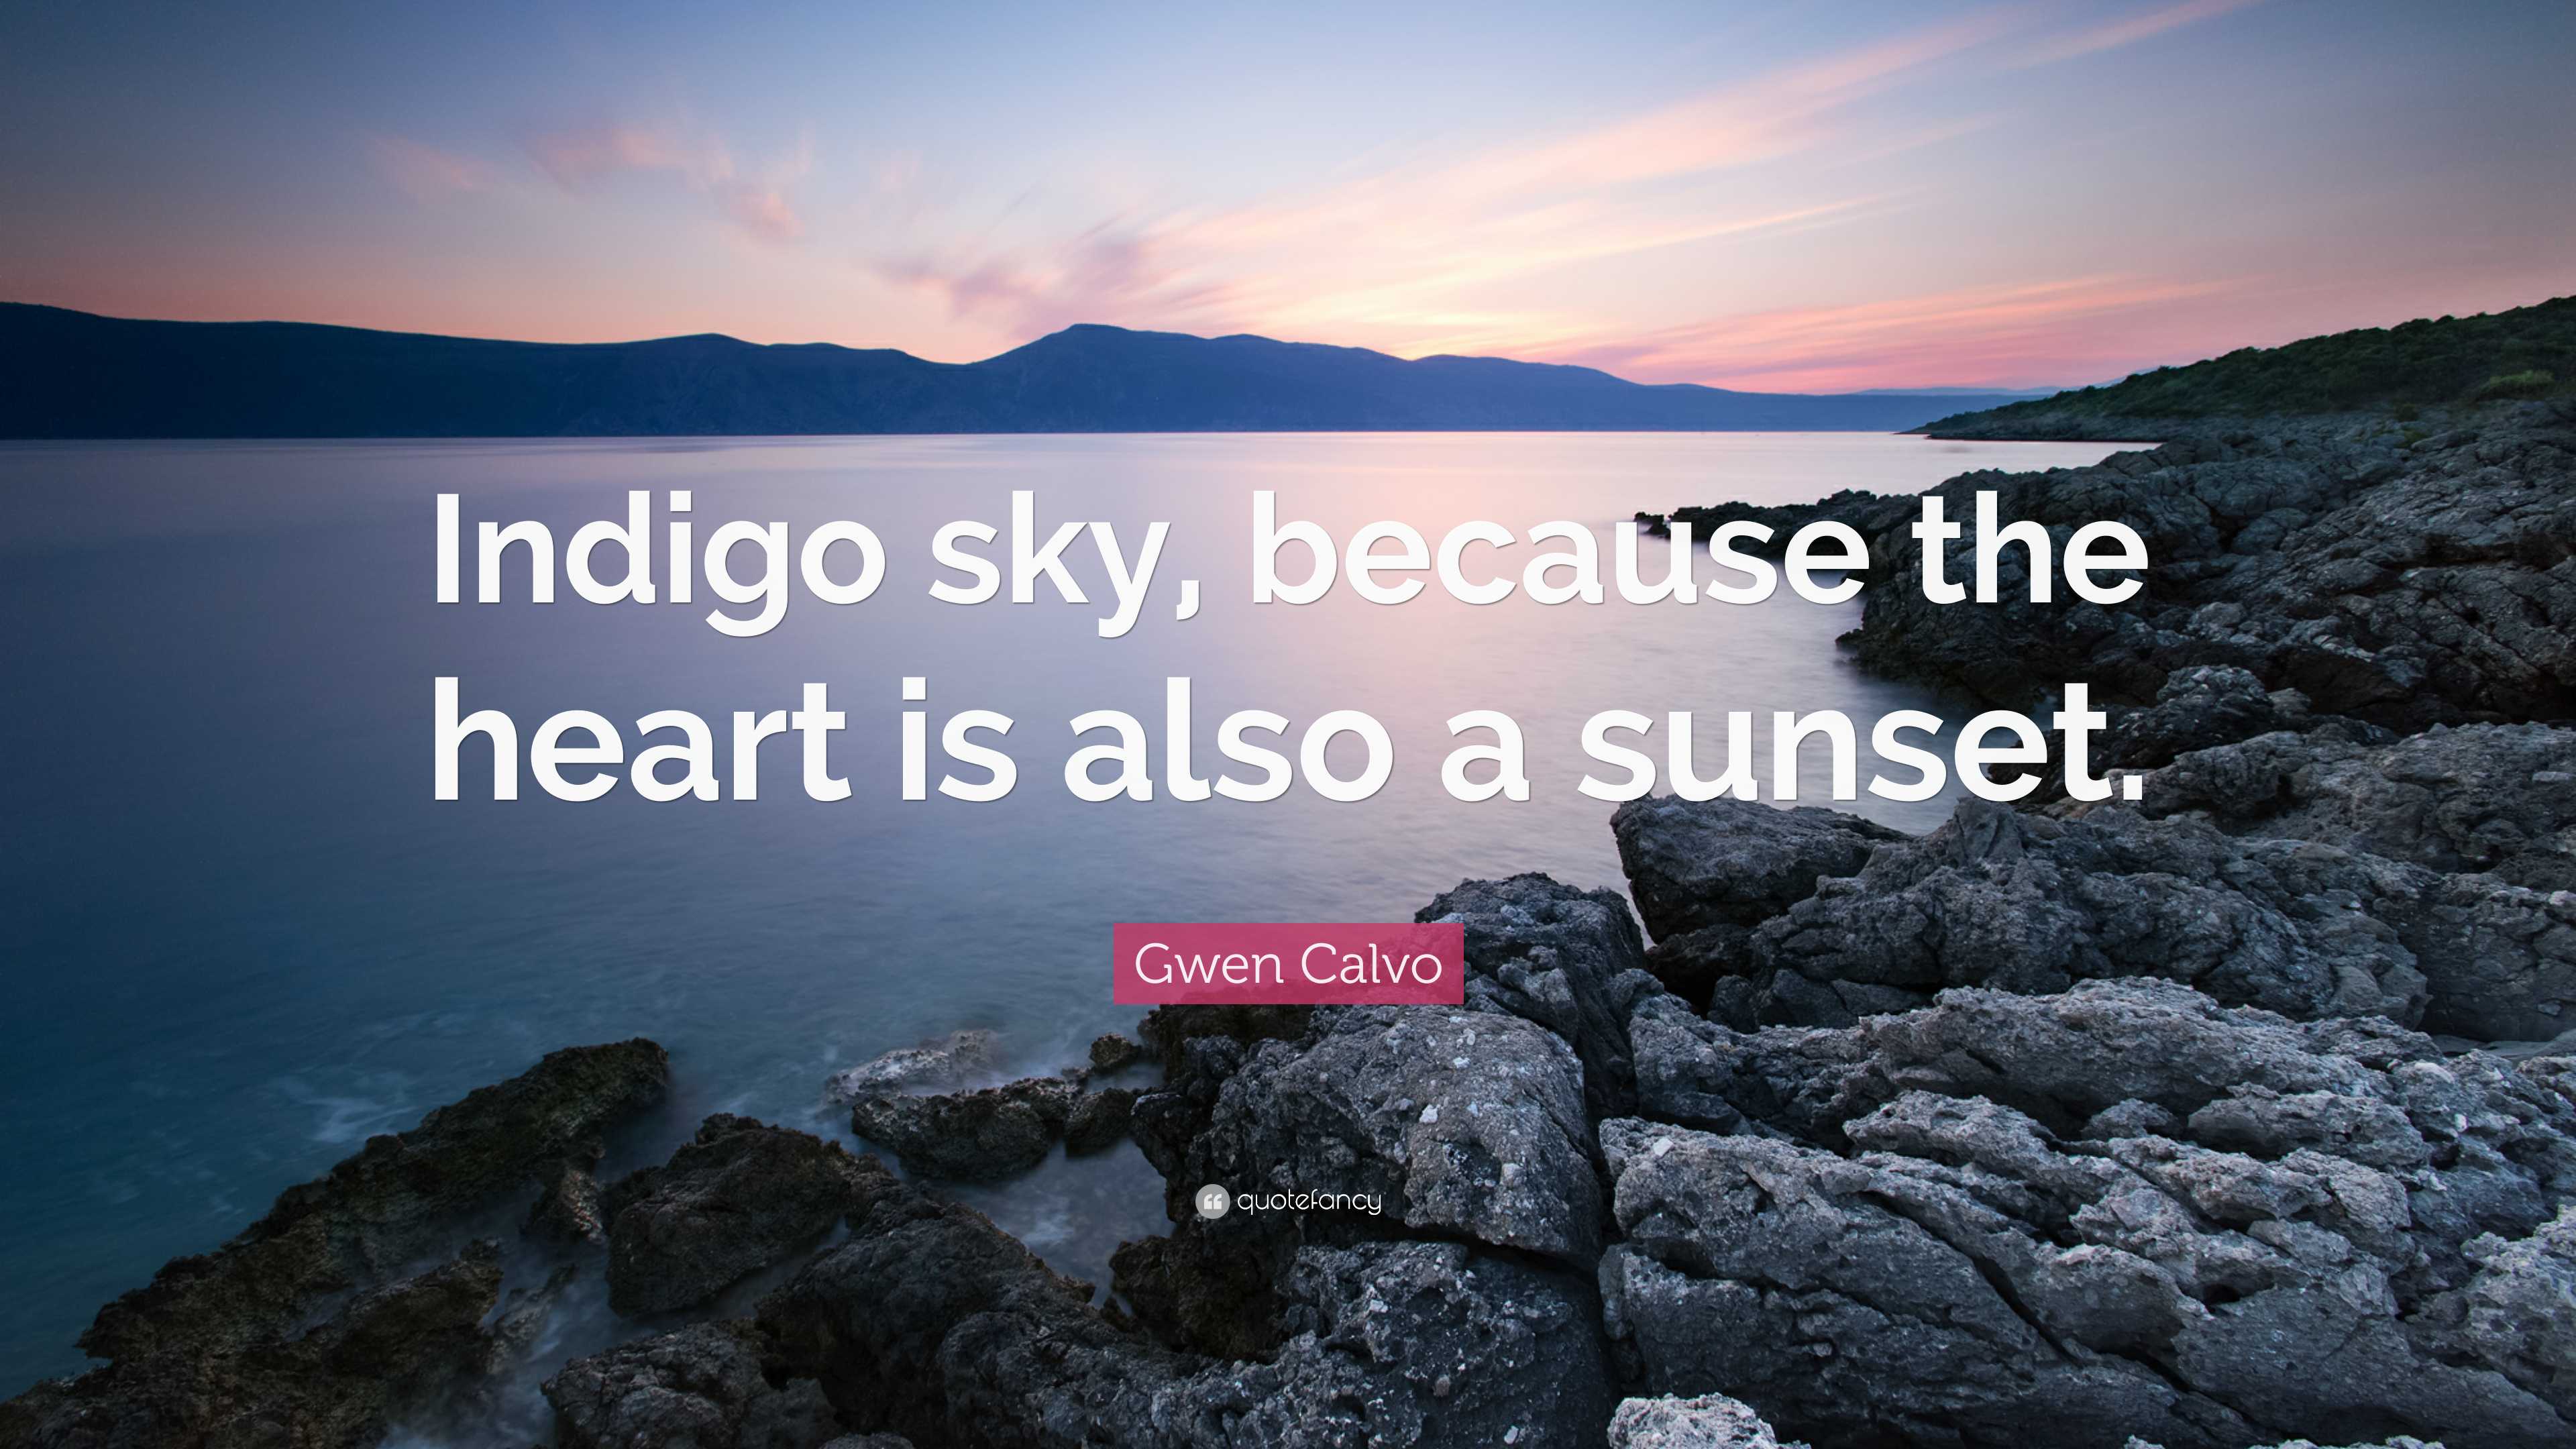 https://quotefancy.com/media/wallpaper/3840x2160/7793440-Gwen-Calvo-Quote-Indigo-sky-because-the-heart-is-also-a-sunset.jpg